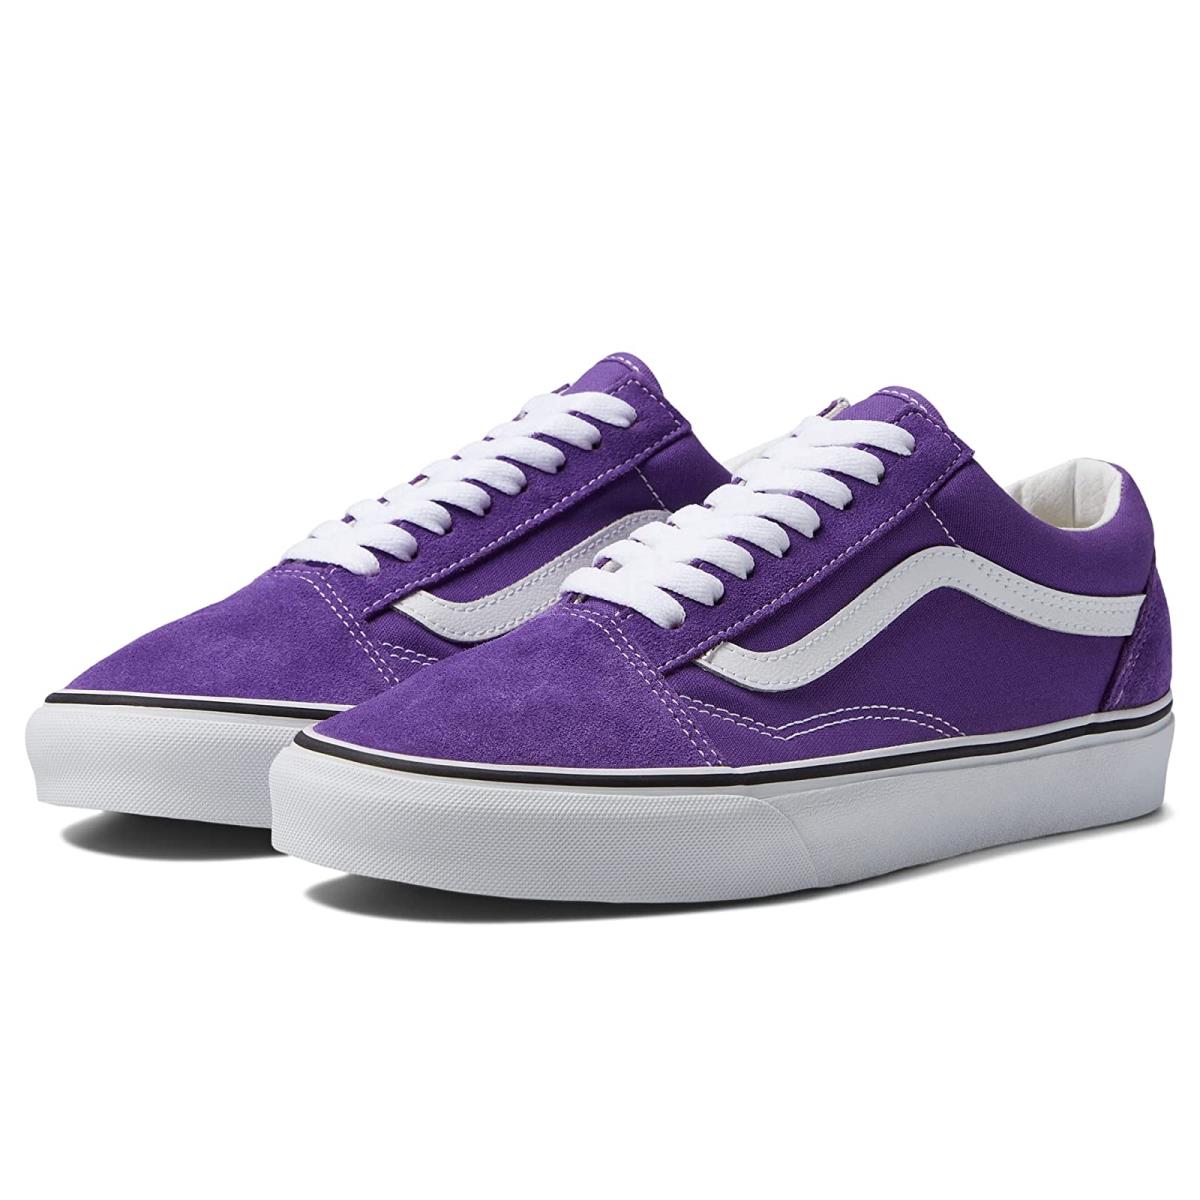 Unisex Sneakers Athletic Shoes Vans Old Skool Color Theory Tillandsia Purple